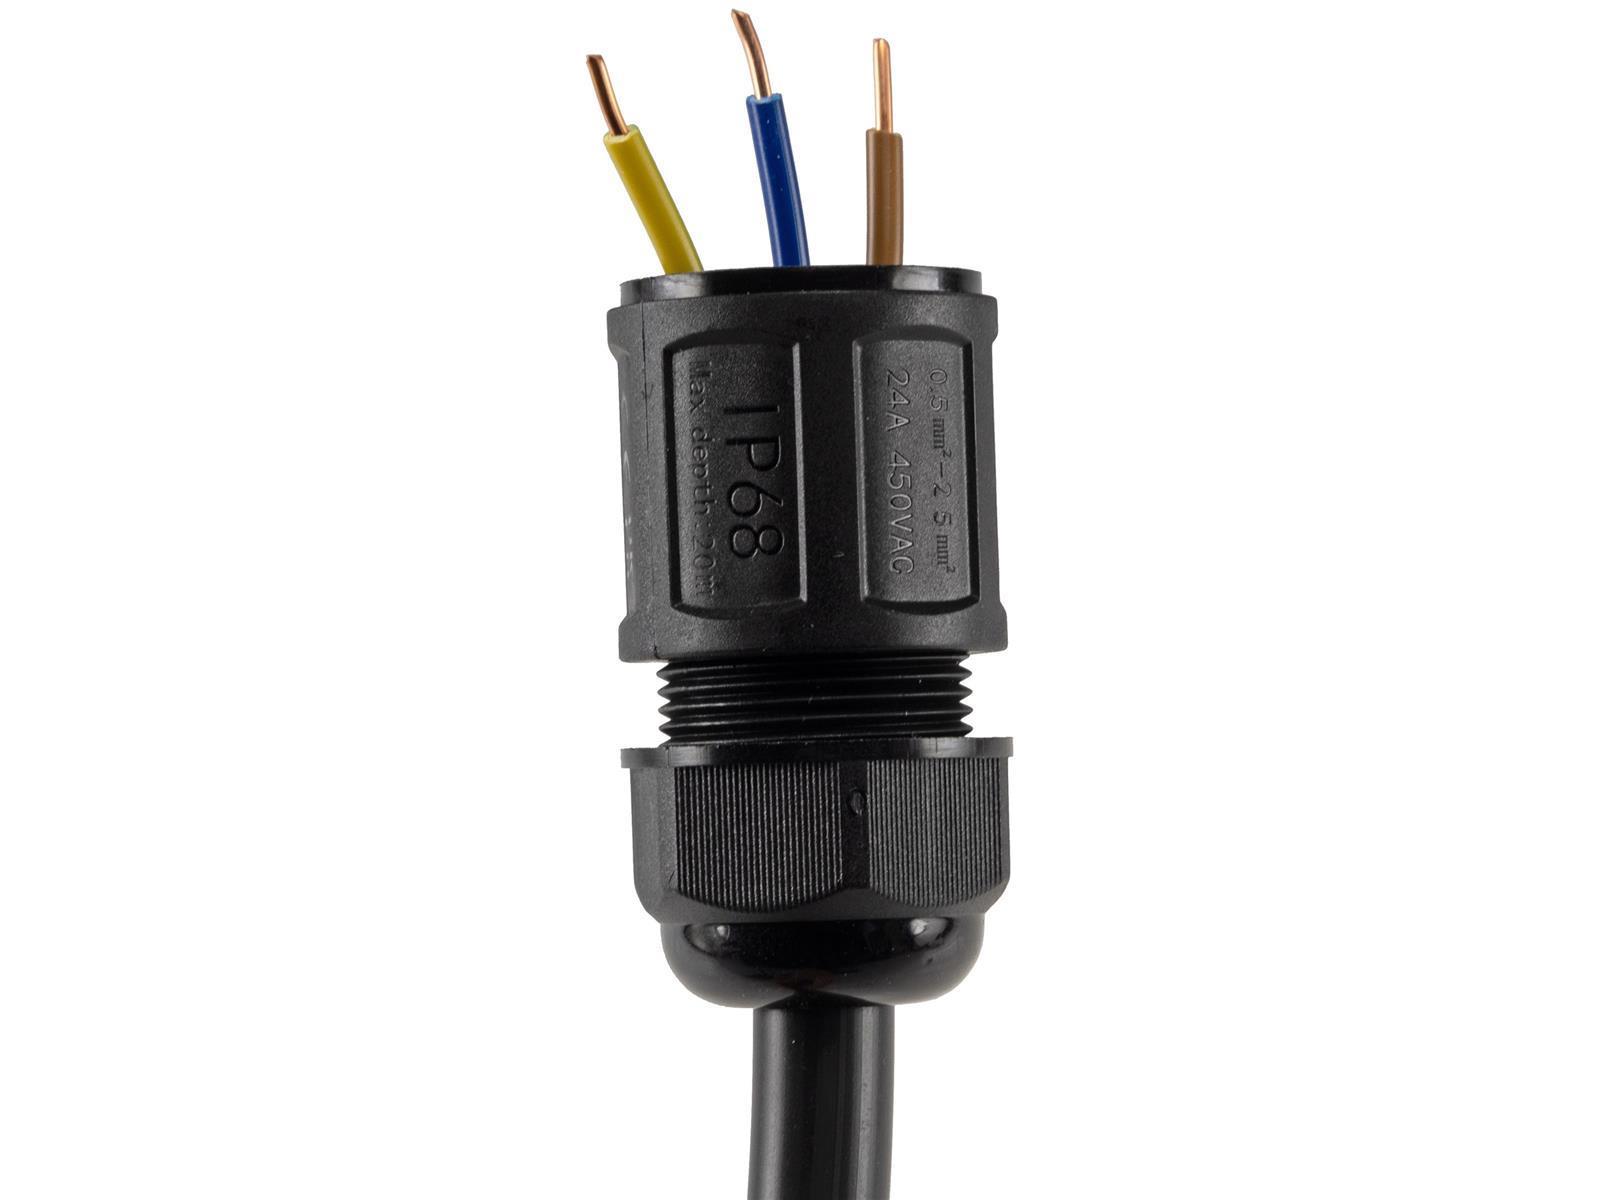 Kabelverbinder 3-polig, IP68, 230V Klemmanschluss, für Kabel Ø 6-11mm